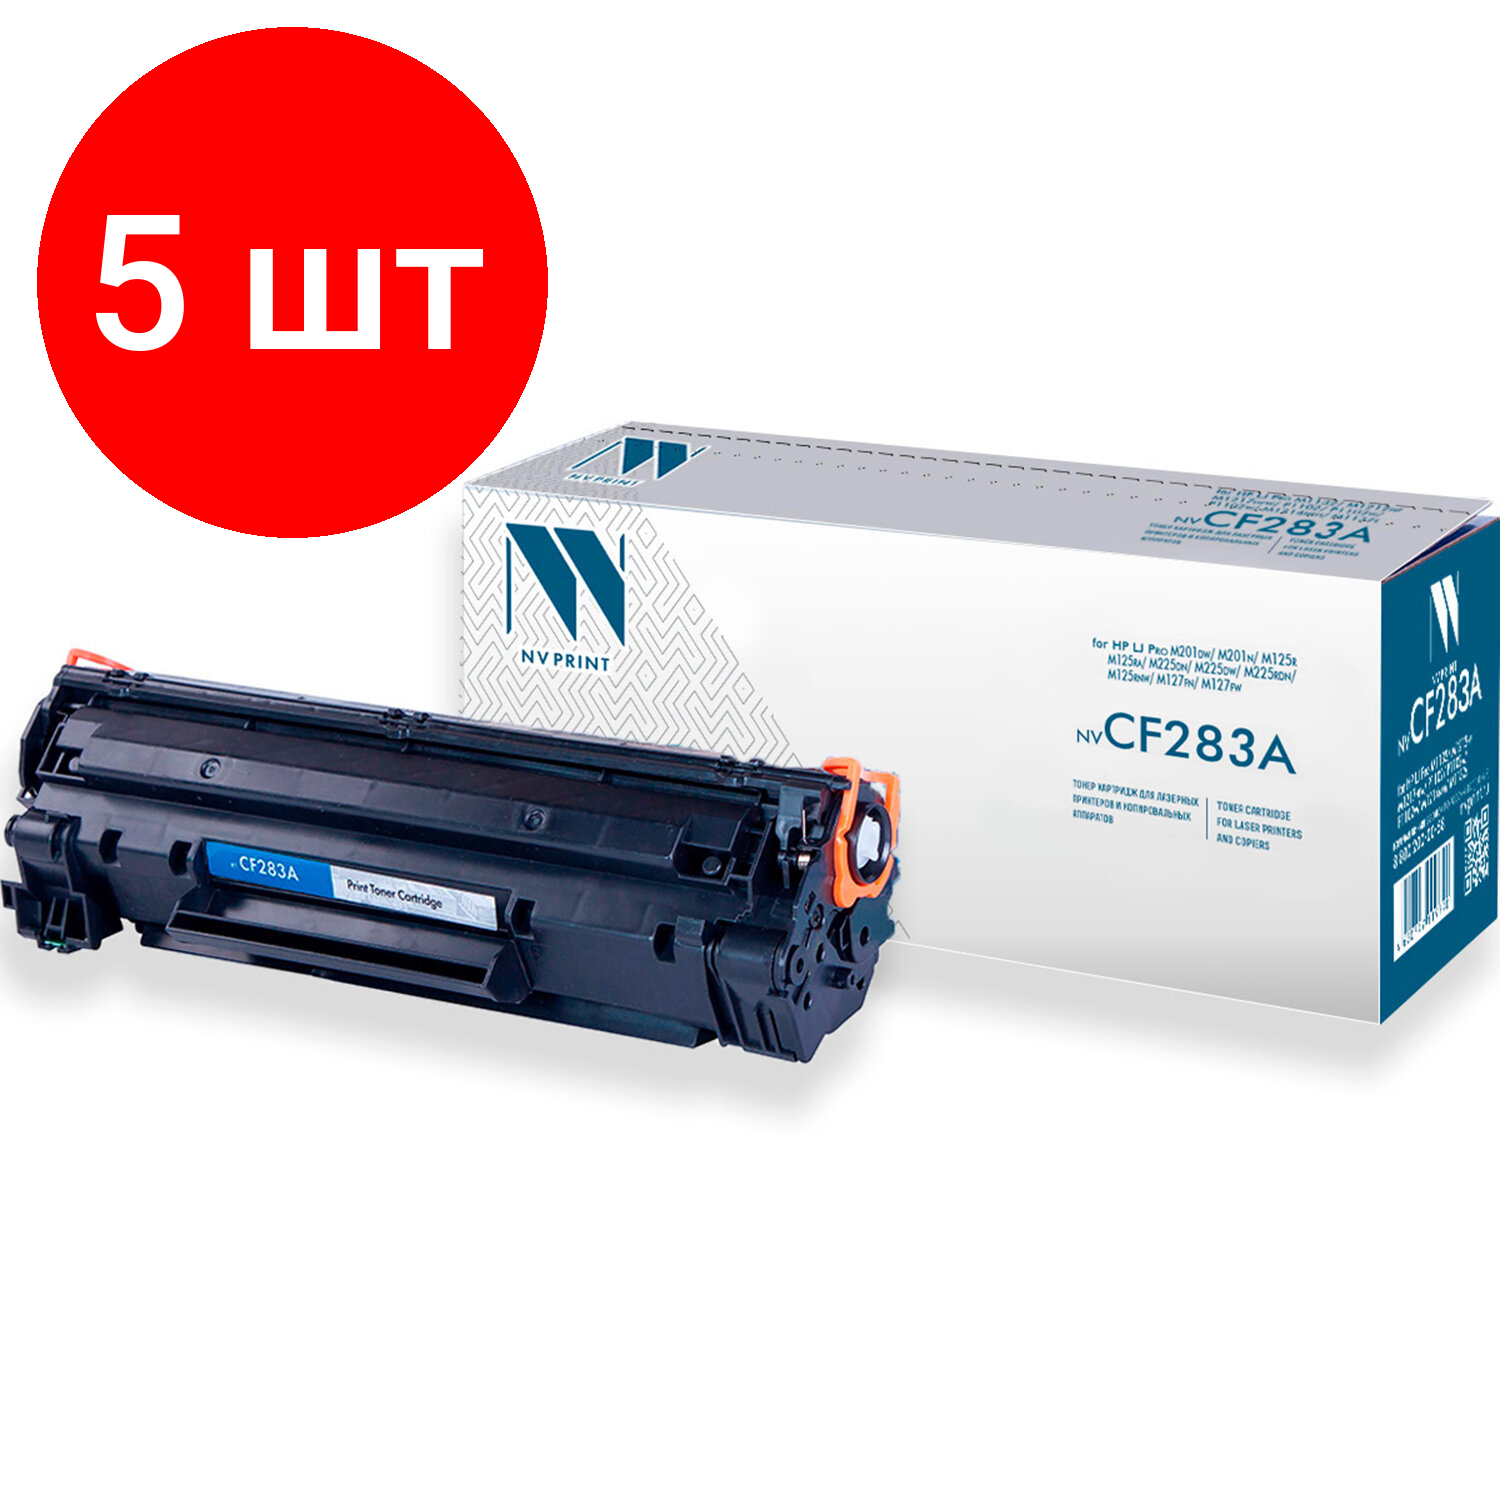 Комплект 5 шт, Картридж лазерный NV PRINT (NV-CF283A) для HP LaserJet Pro M125/M201/M127, ресурс 1500 стр.